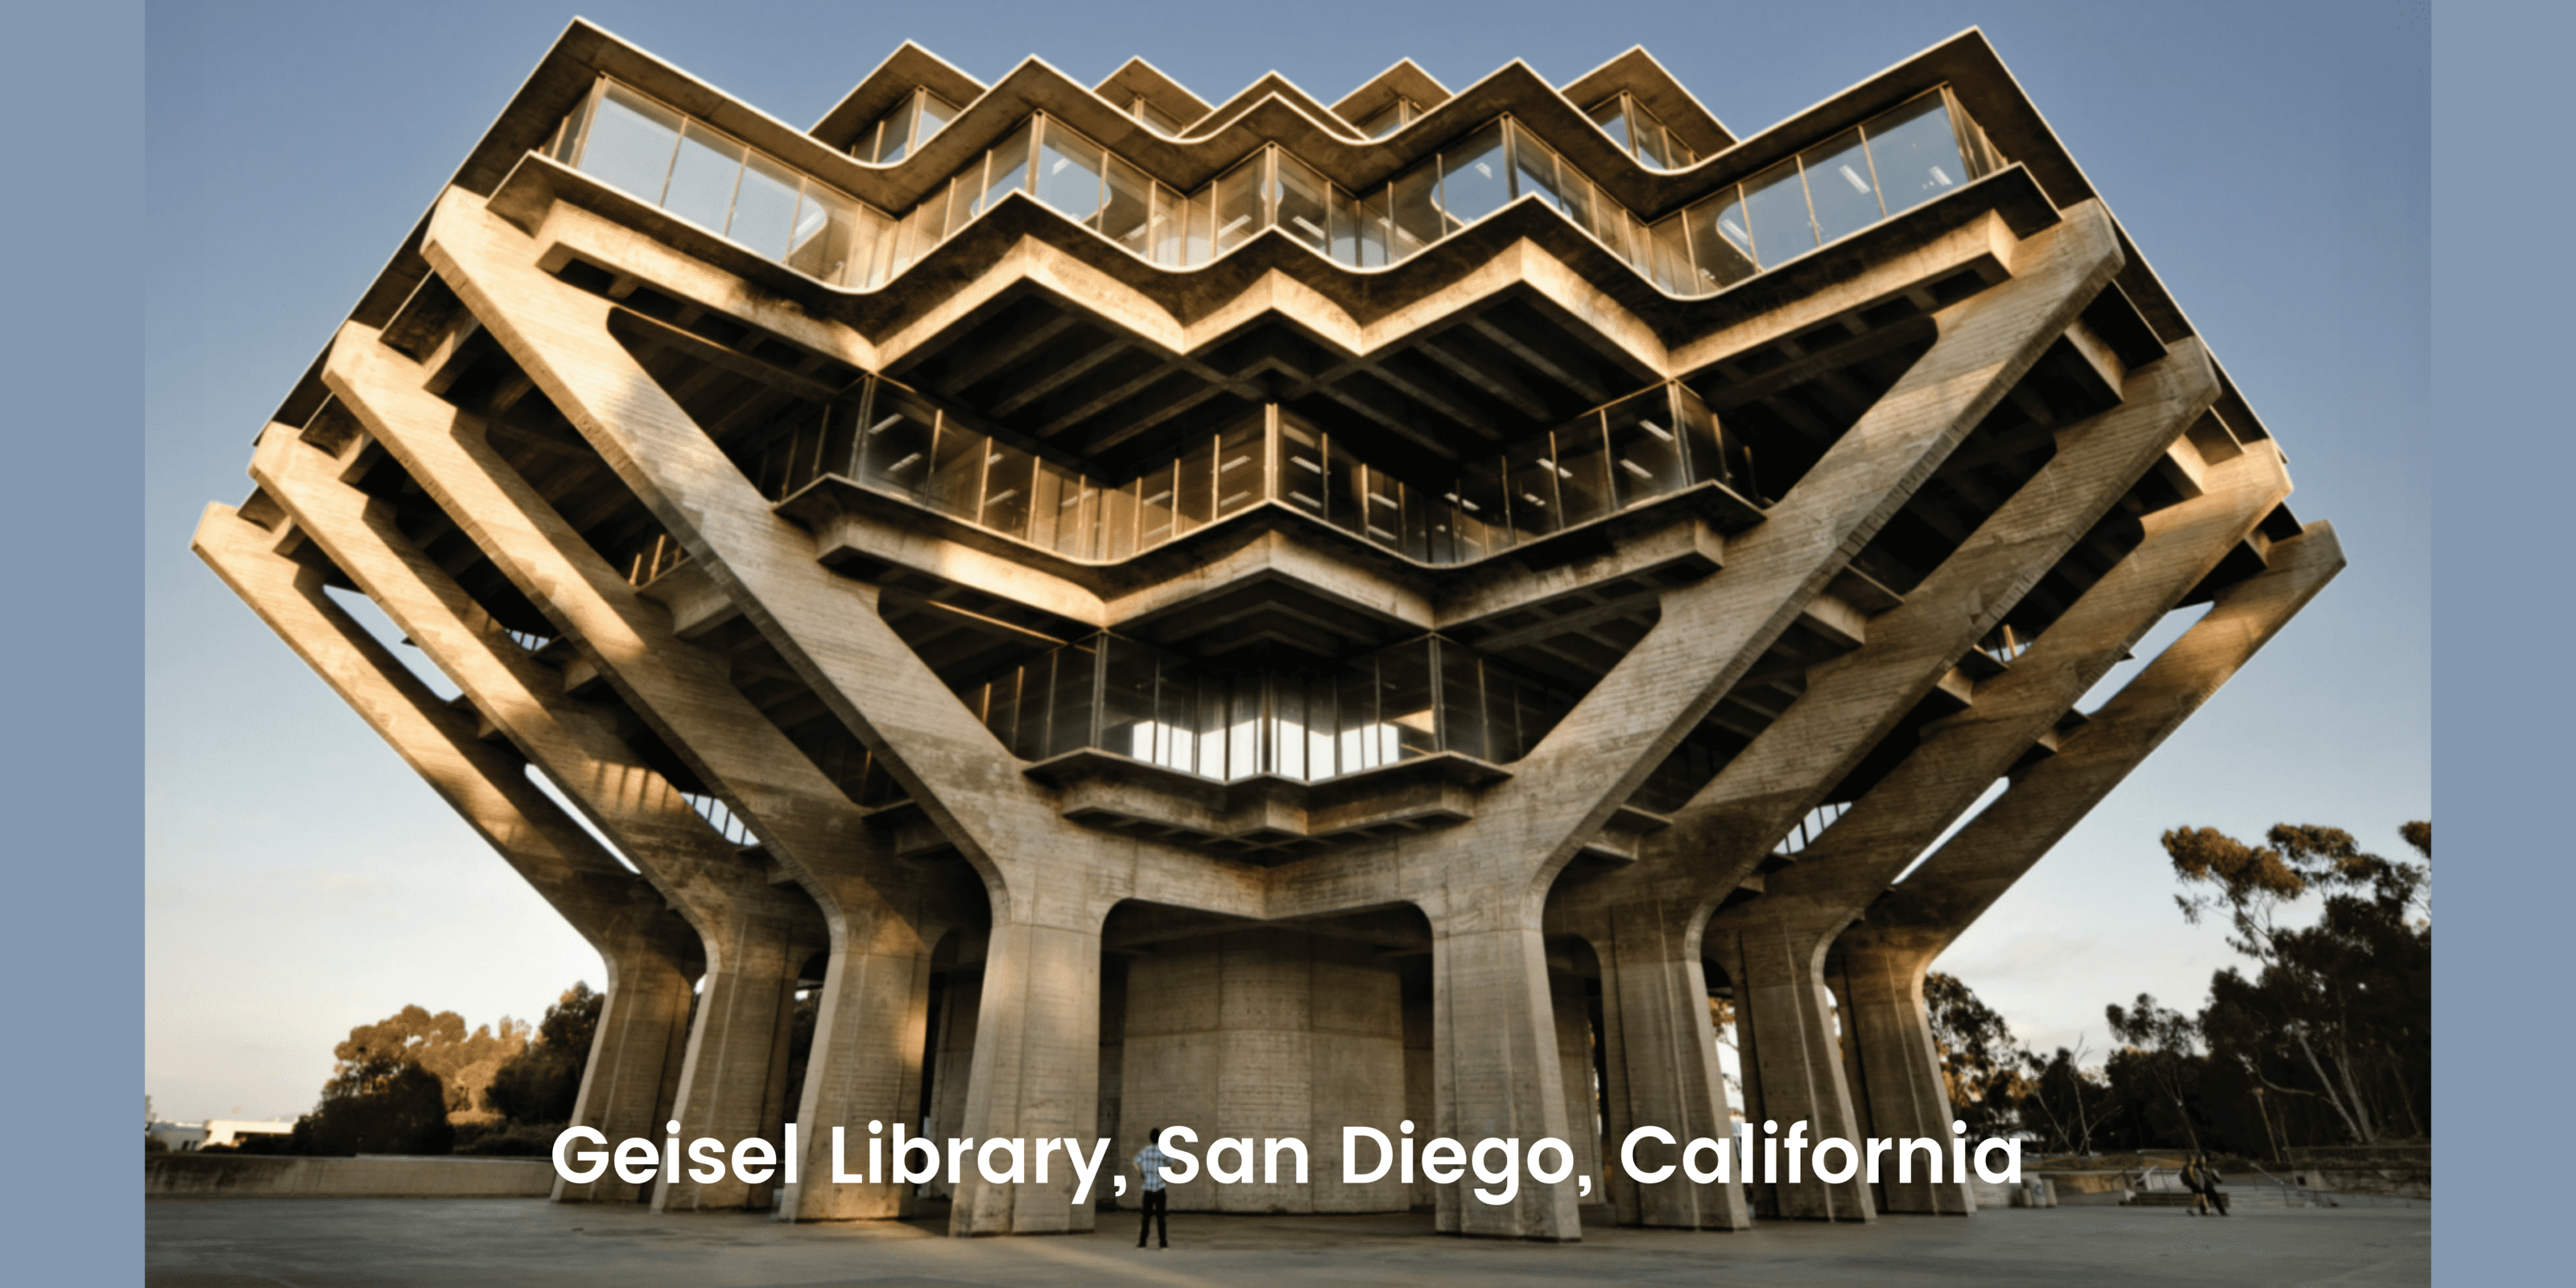 Geisel Library in San Diego